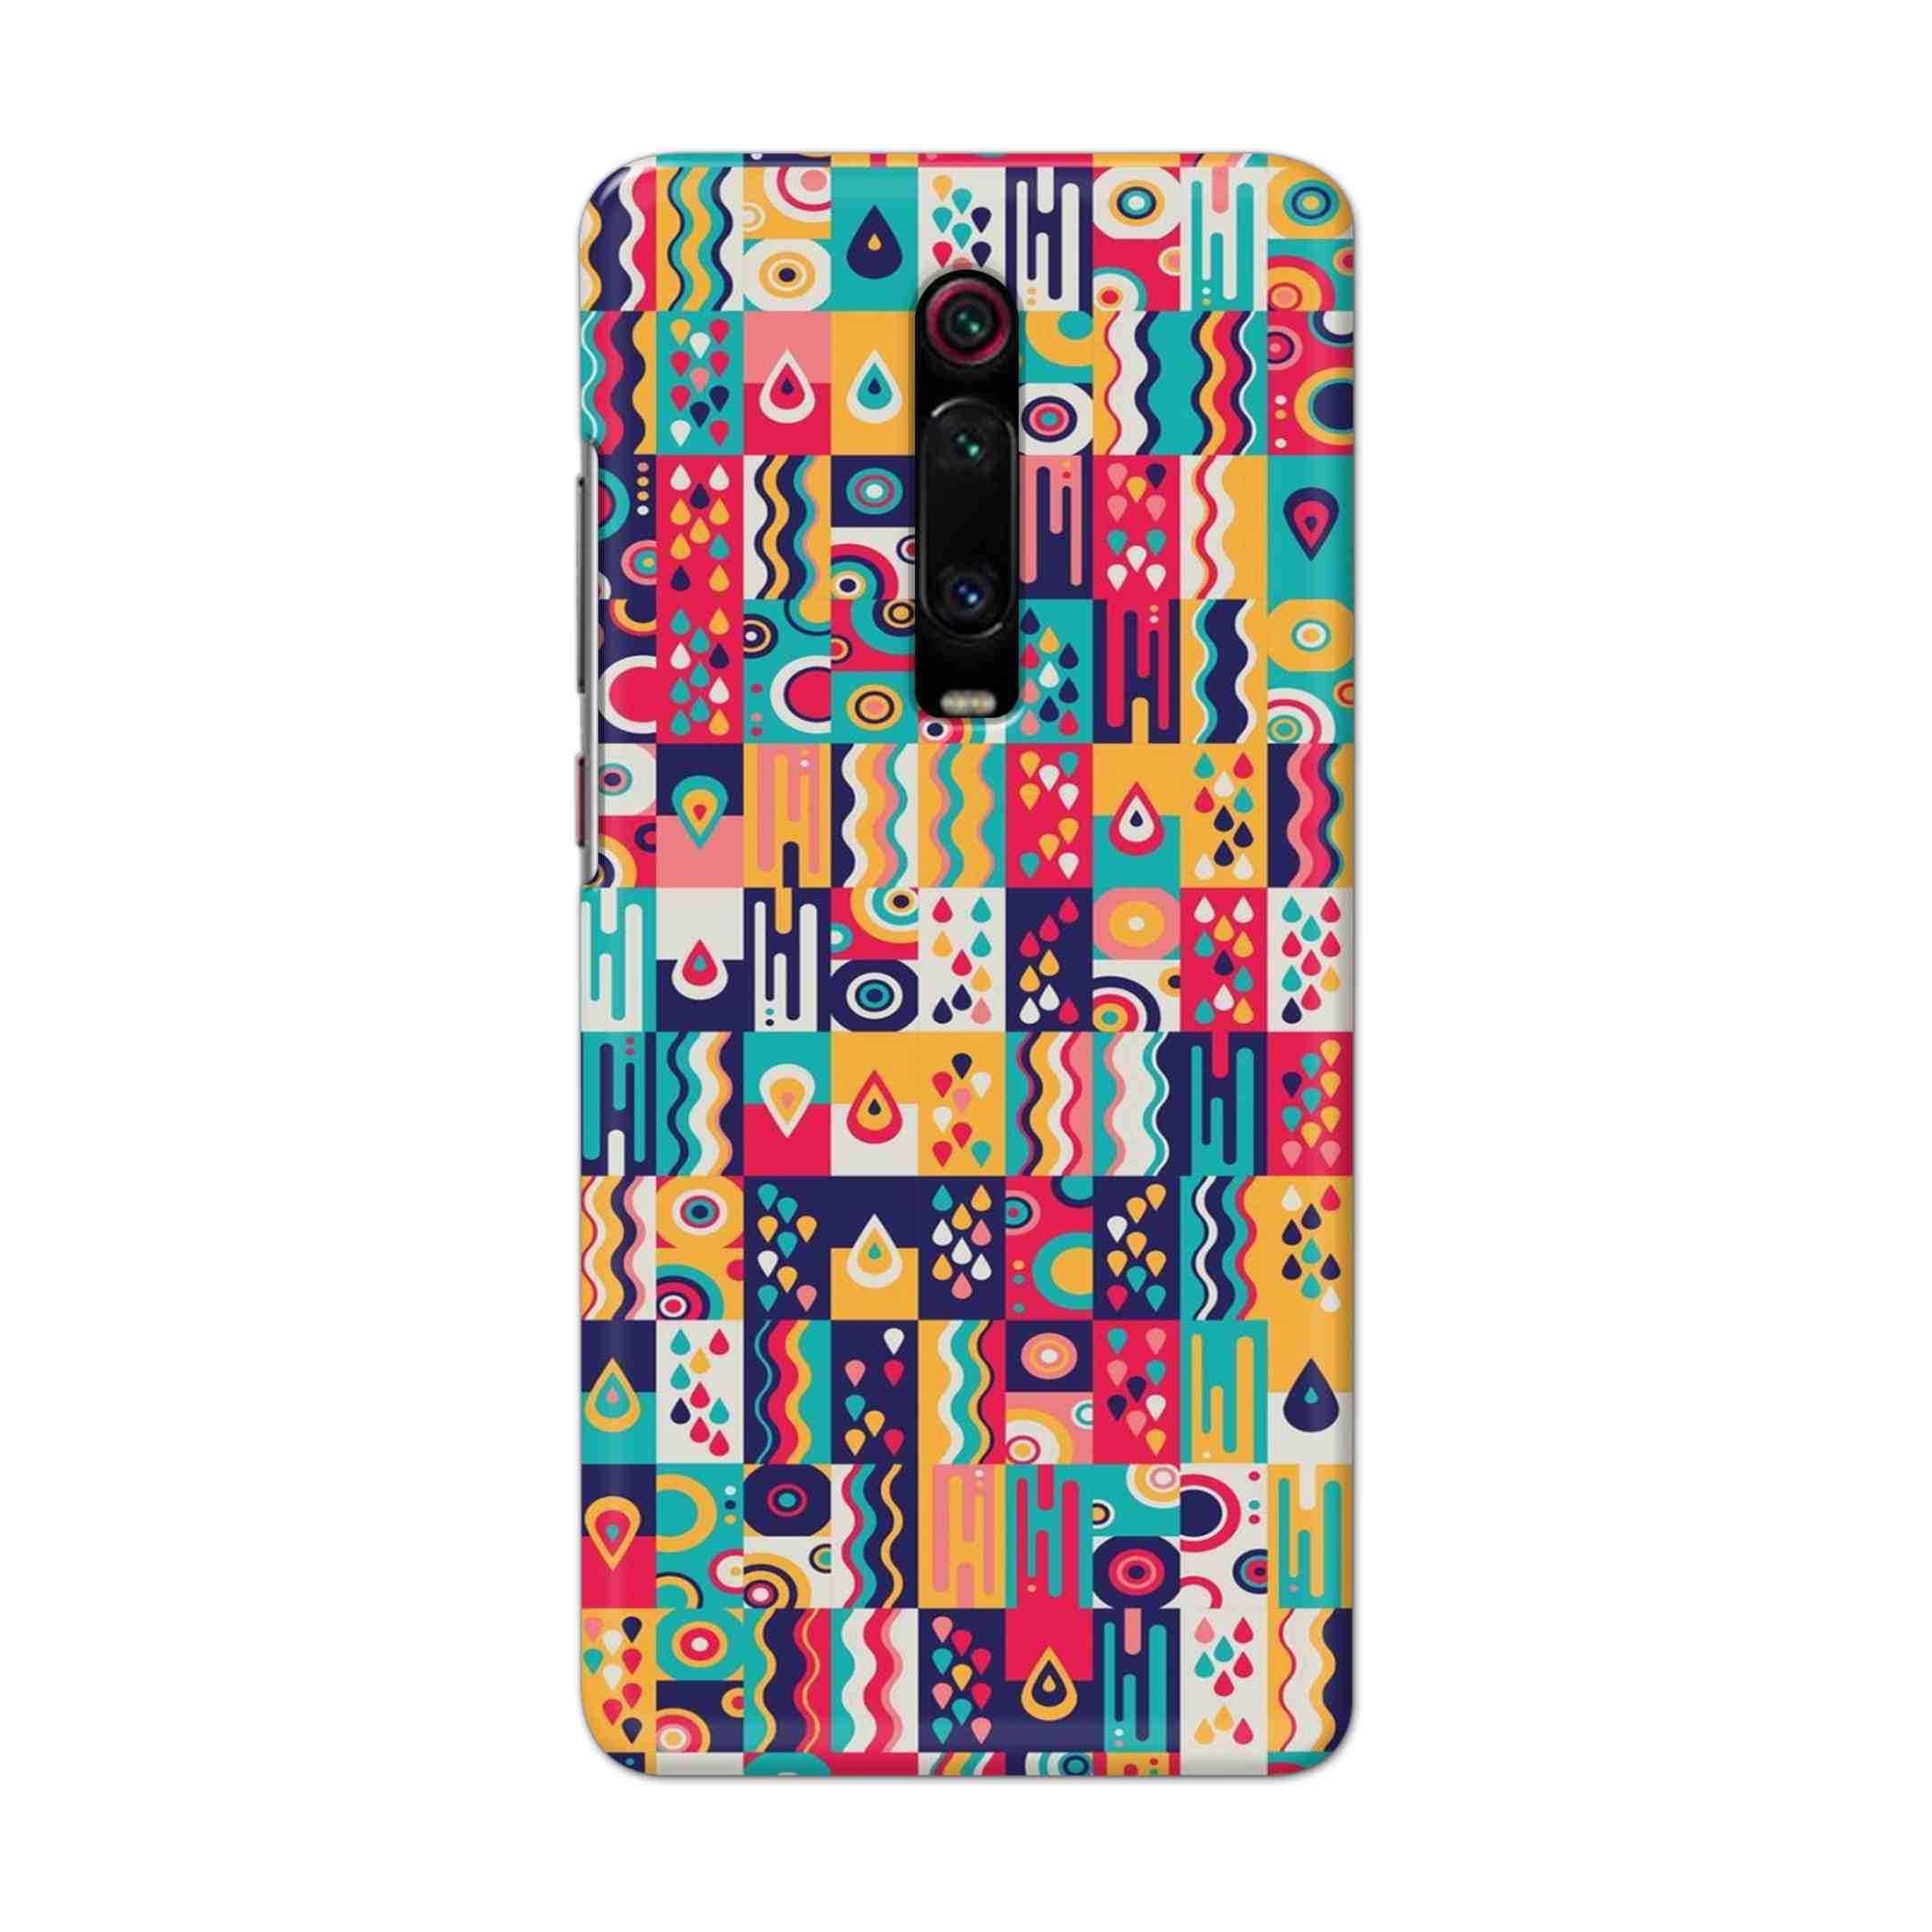 Buy Art Hard Back Mobile Phone Case Cover For Xiaomi Redmi K20 Online